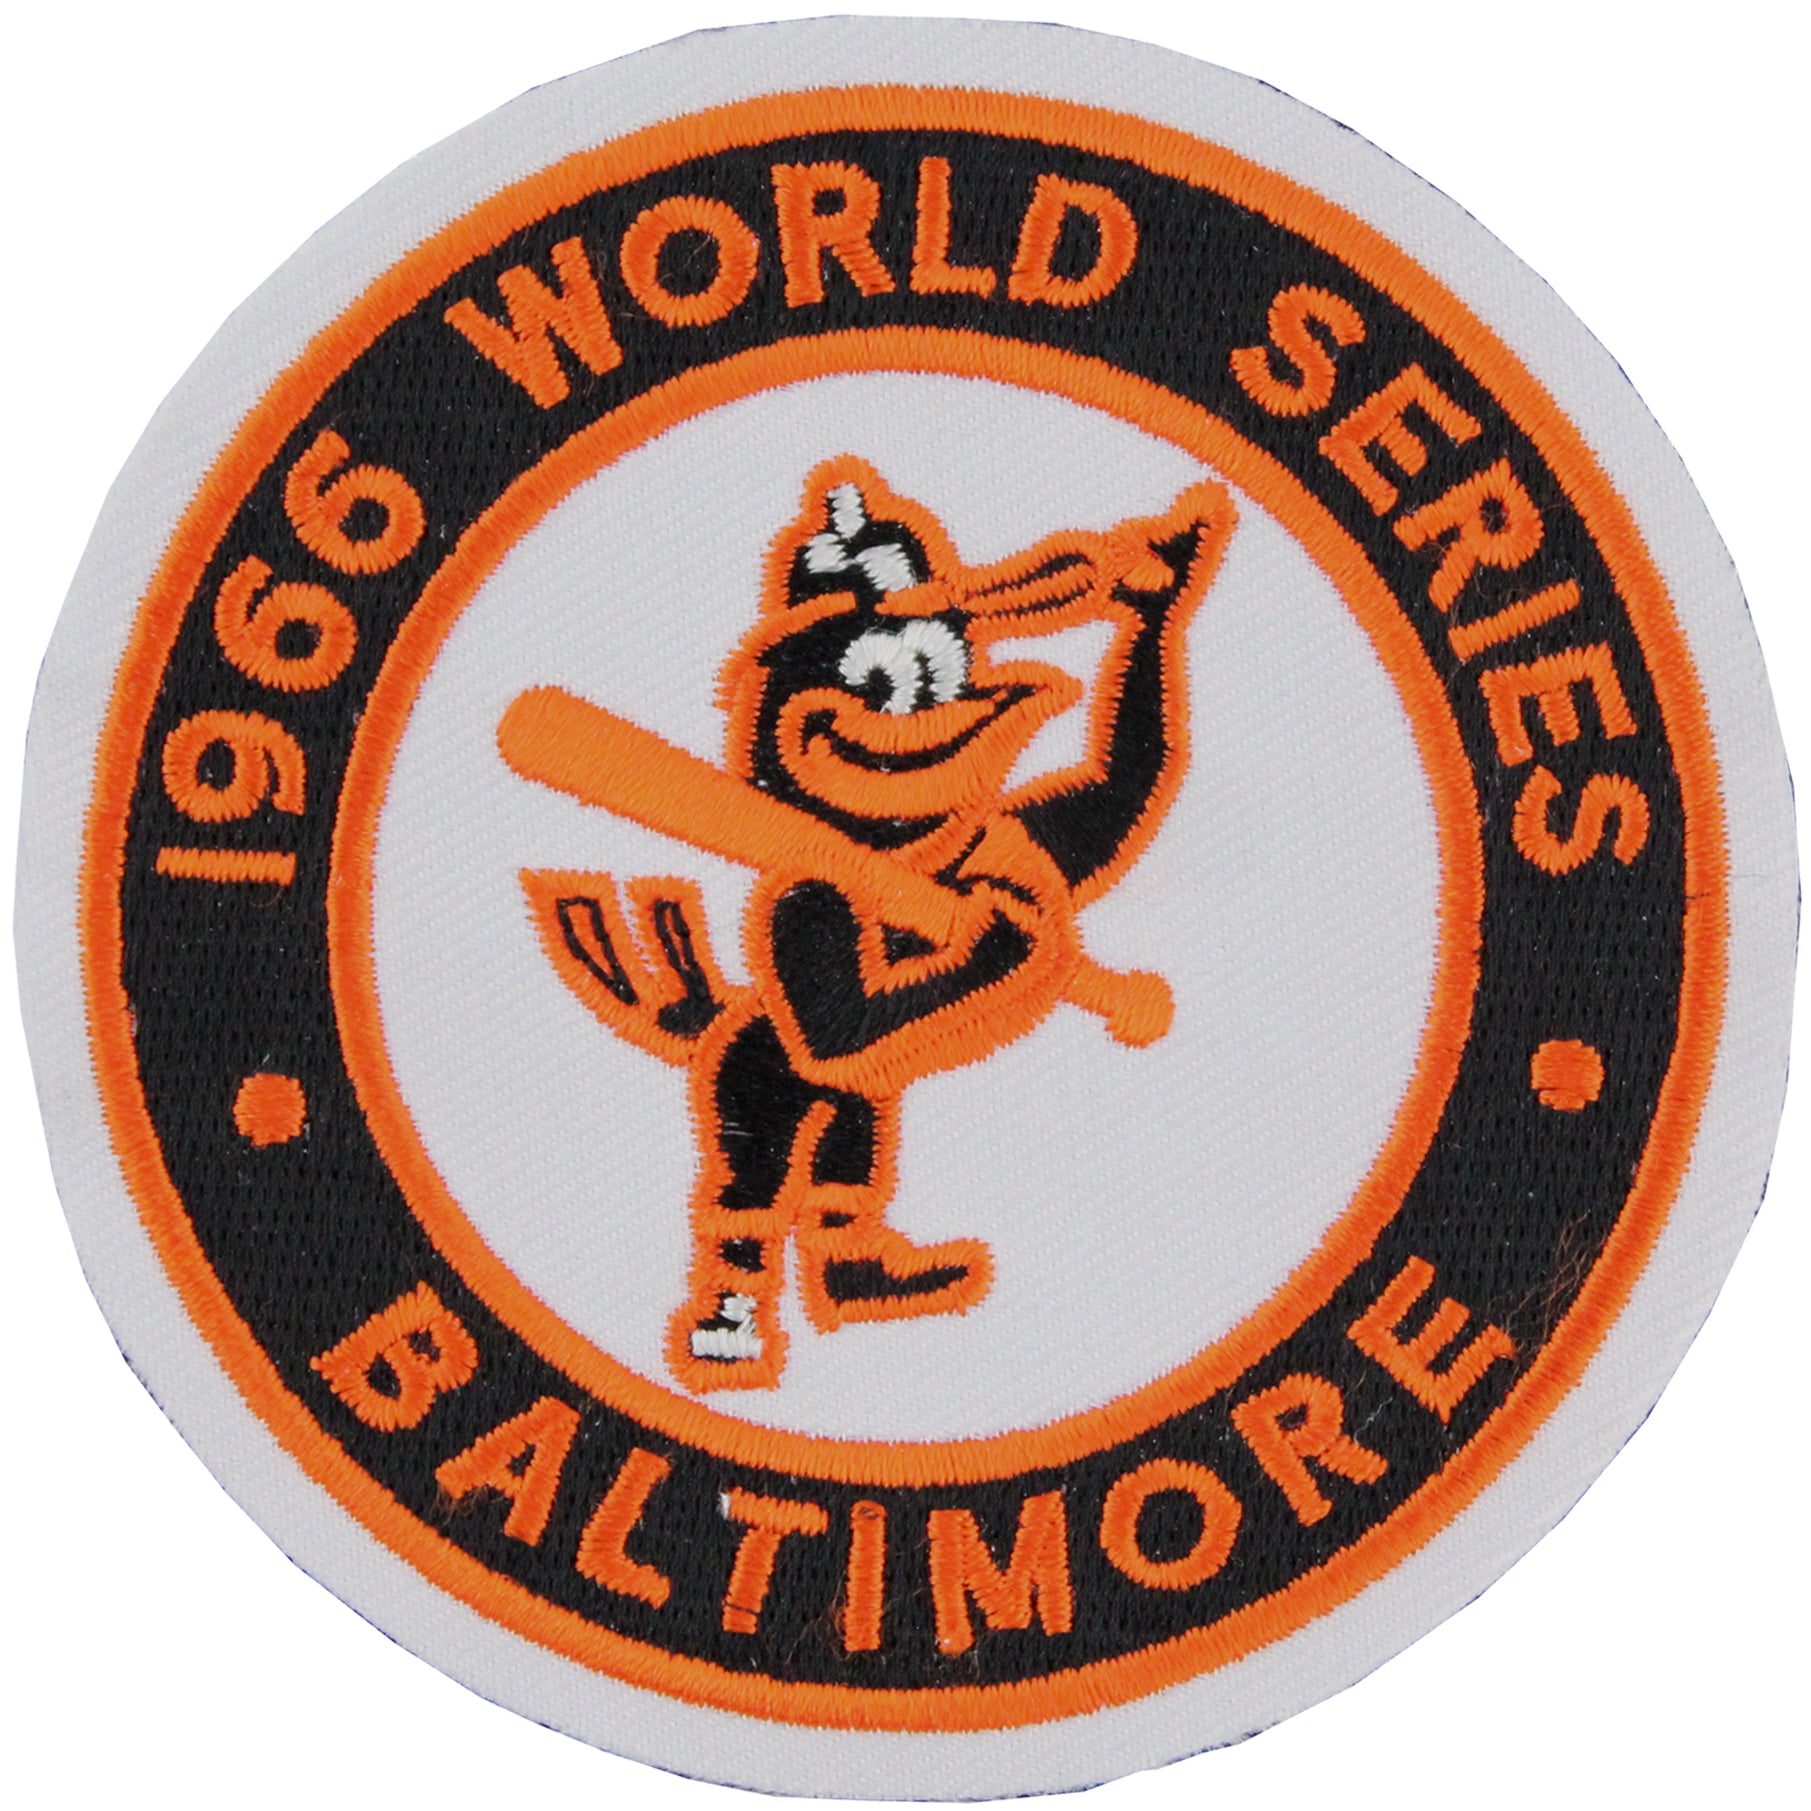 Baltimore Orioles 1966 World Series Champions Commemorative Patch